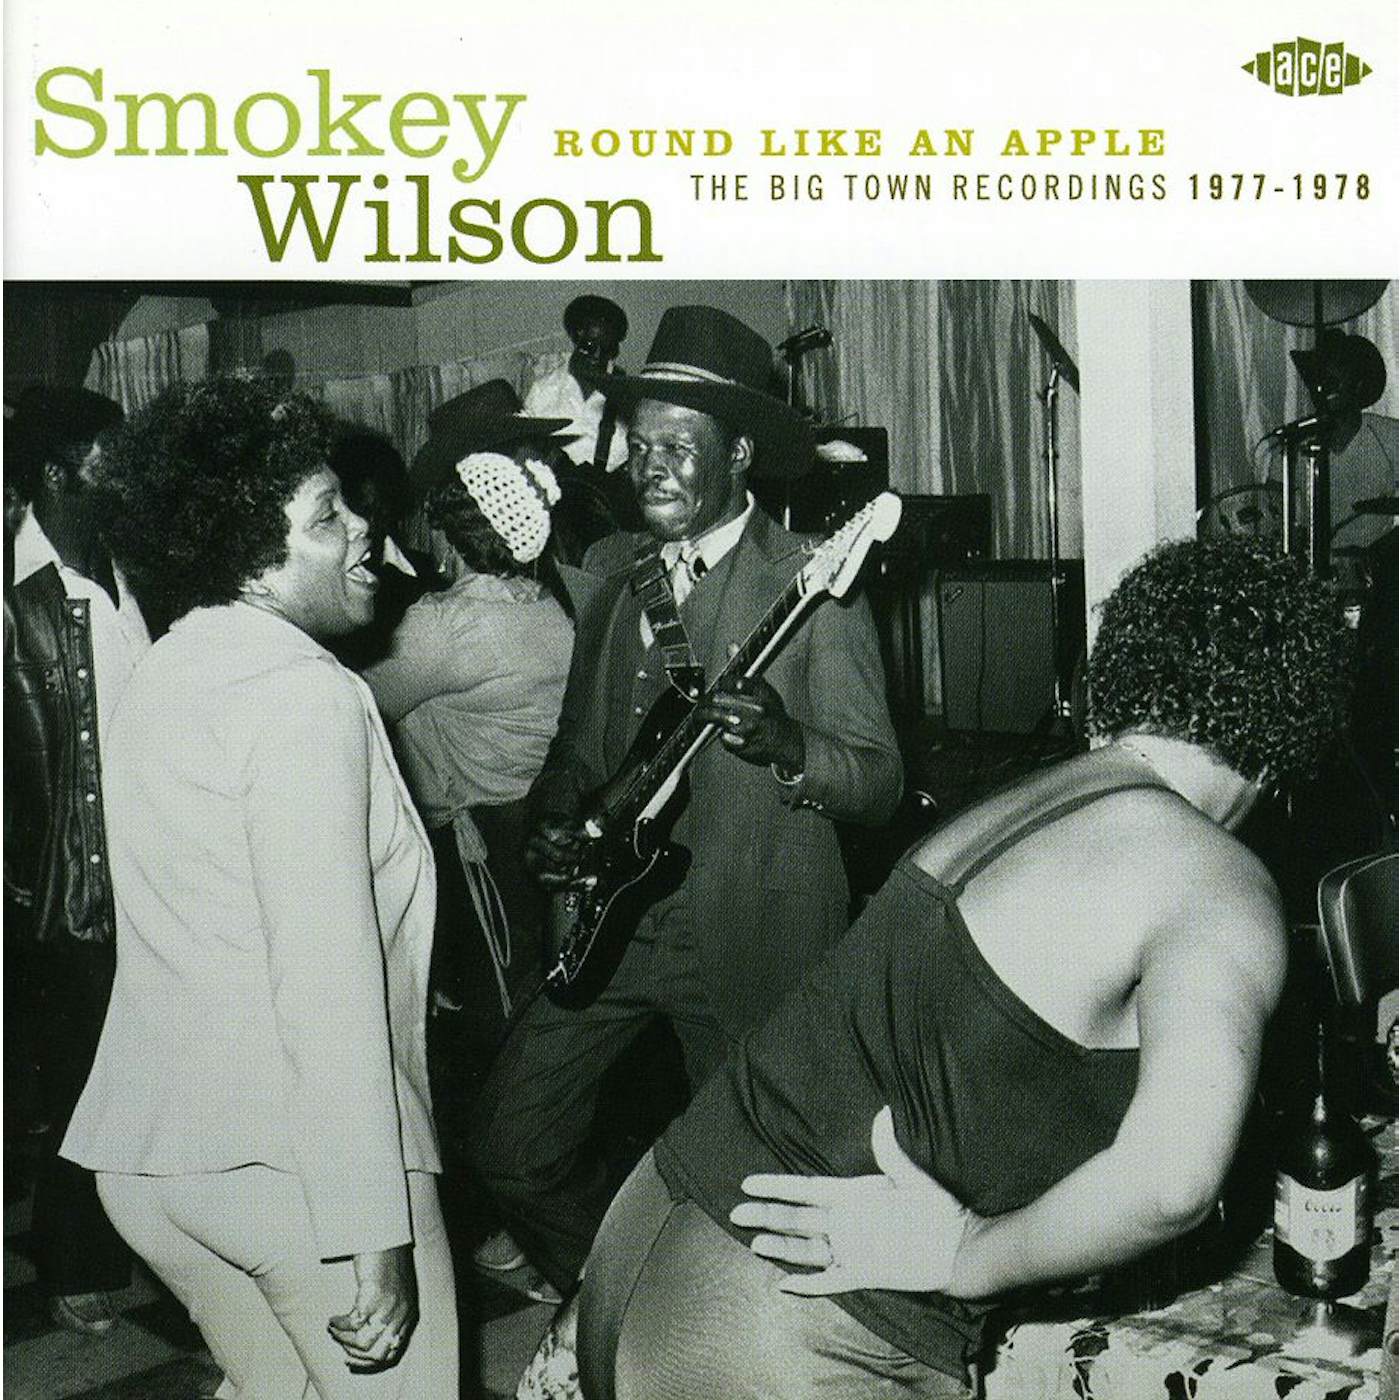 Smokey Wilson ROUND LIKE AN APPLE: BIG TOWN SESSIONS 1977-1978 CD